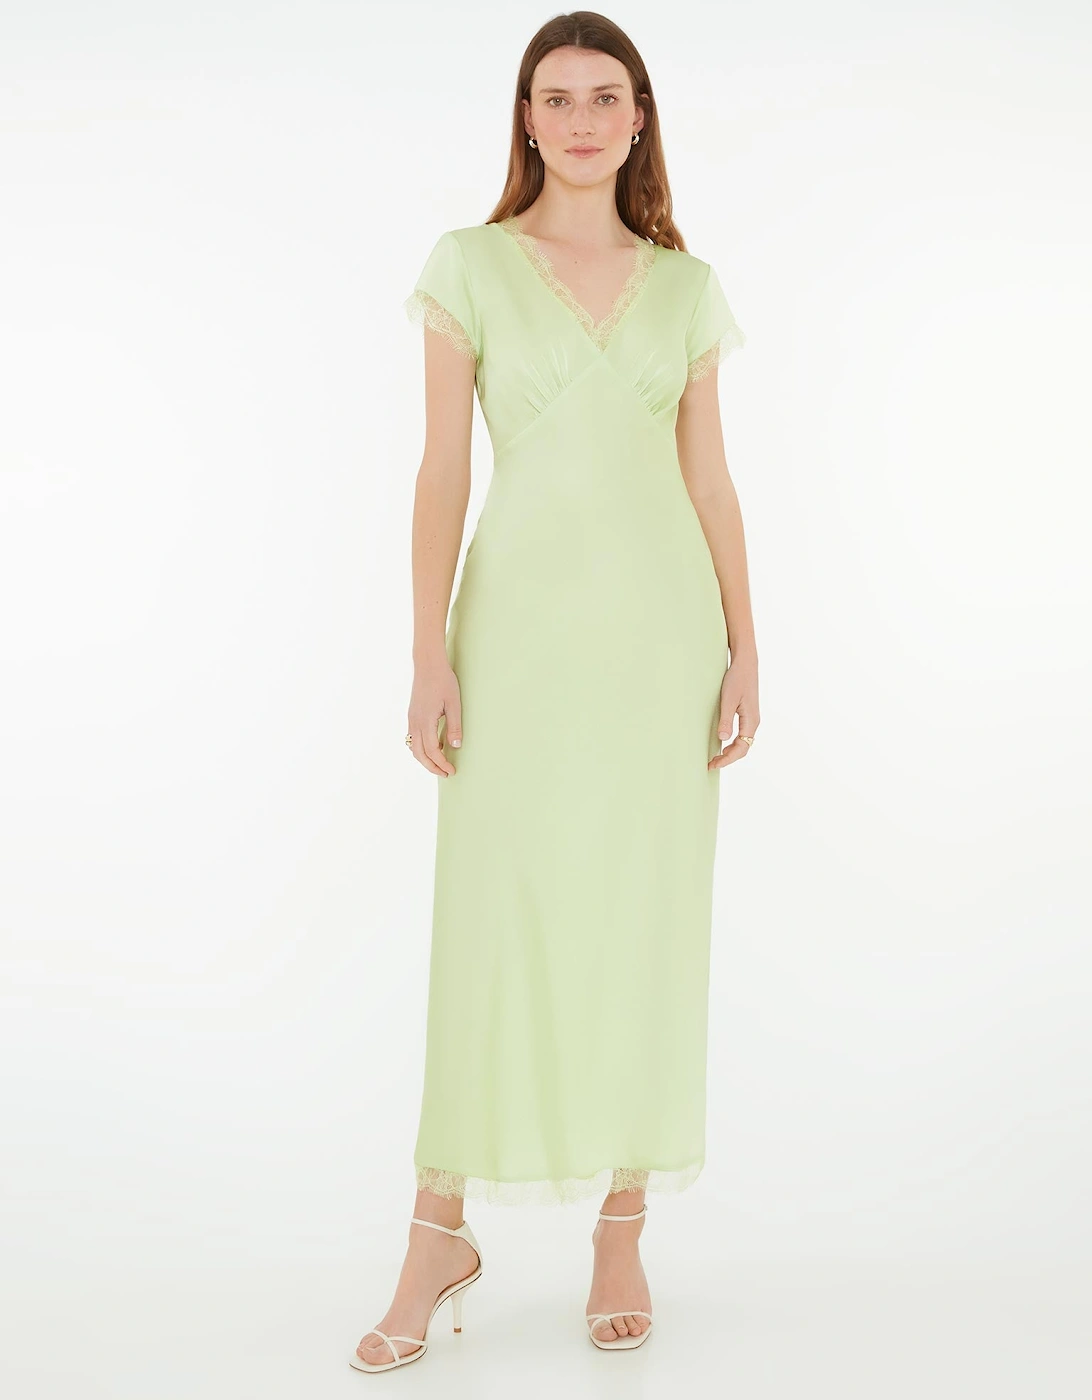 Woolf Sleeved Slip Dress in Green